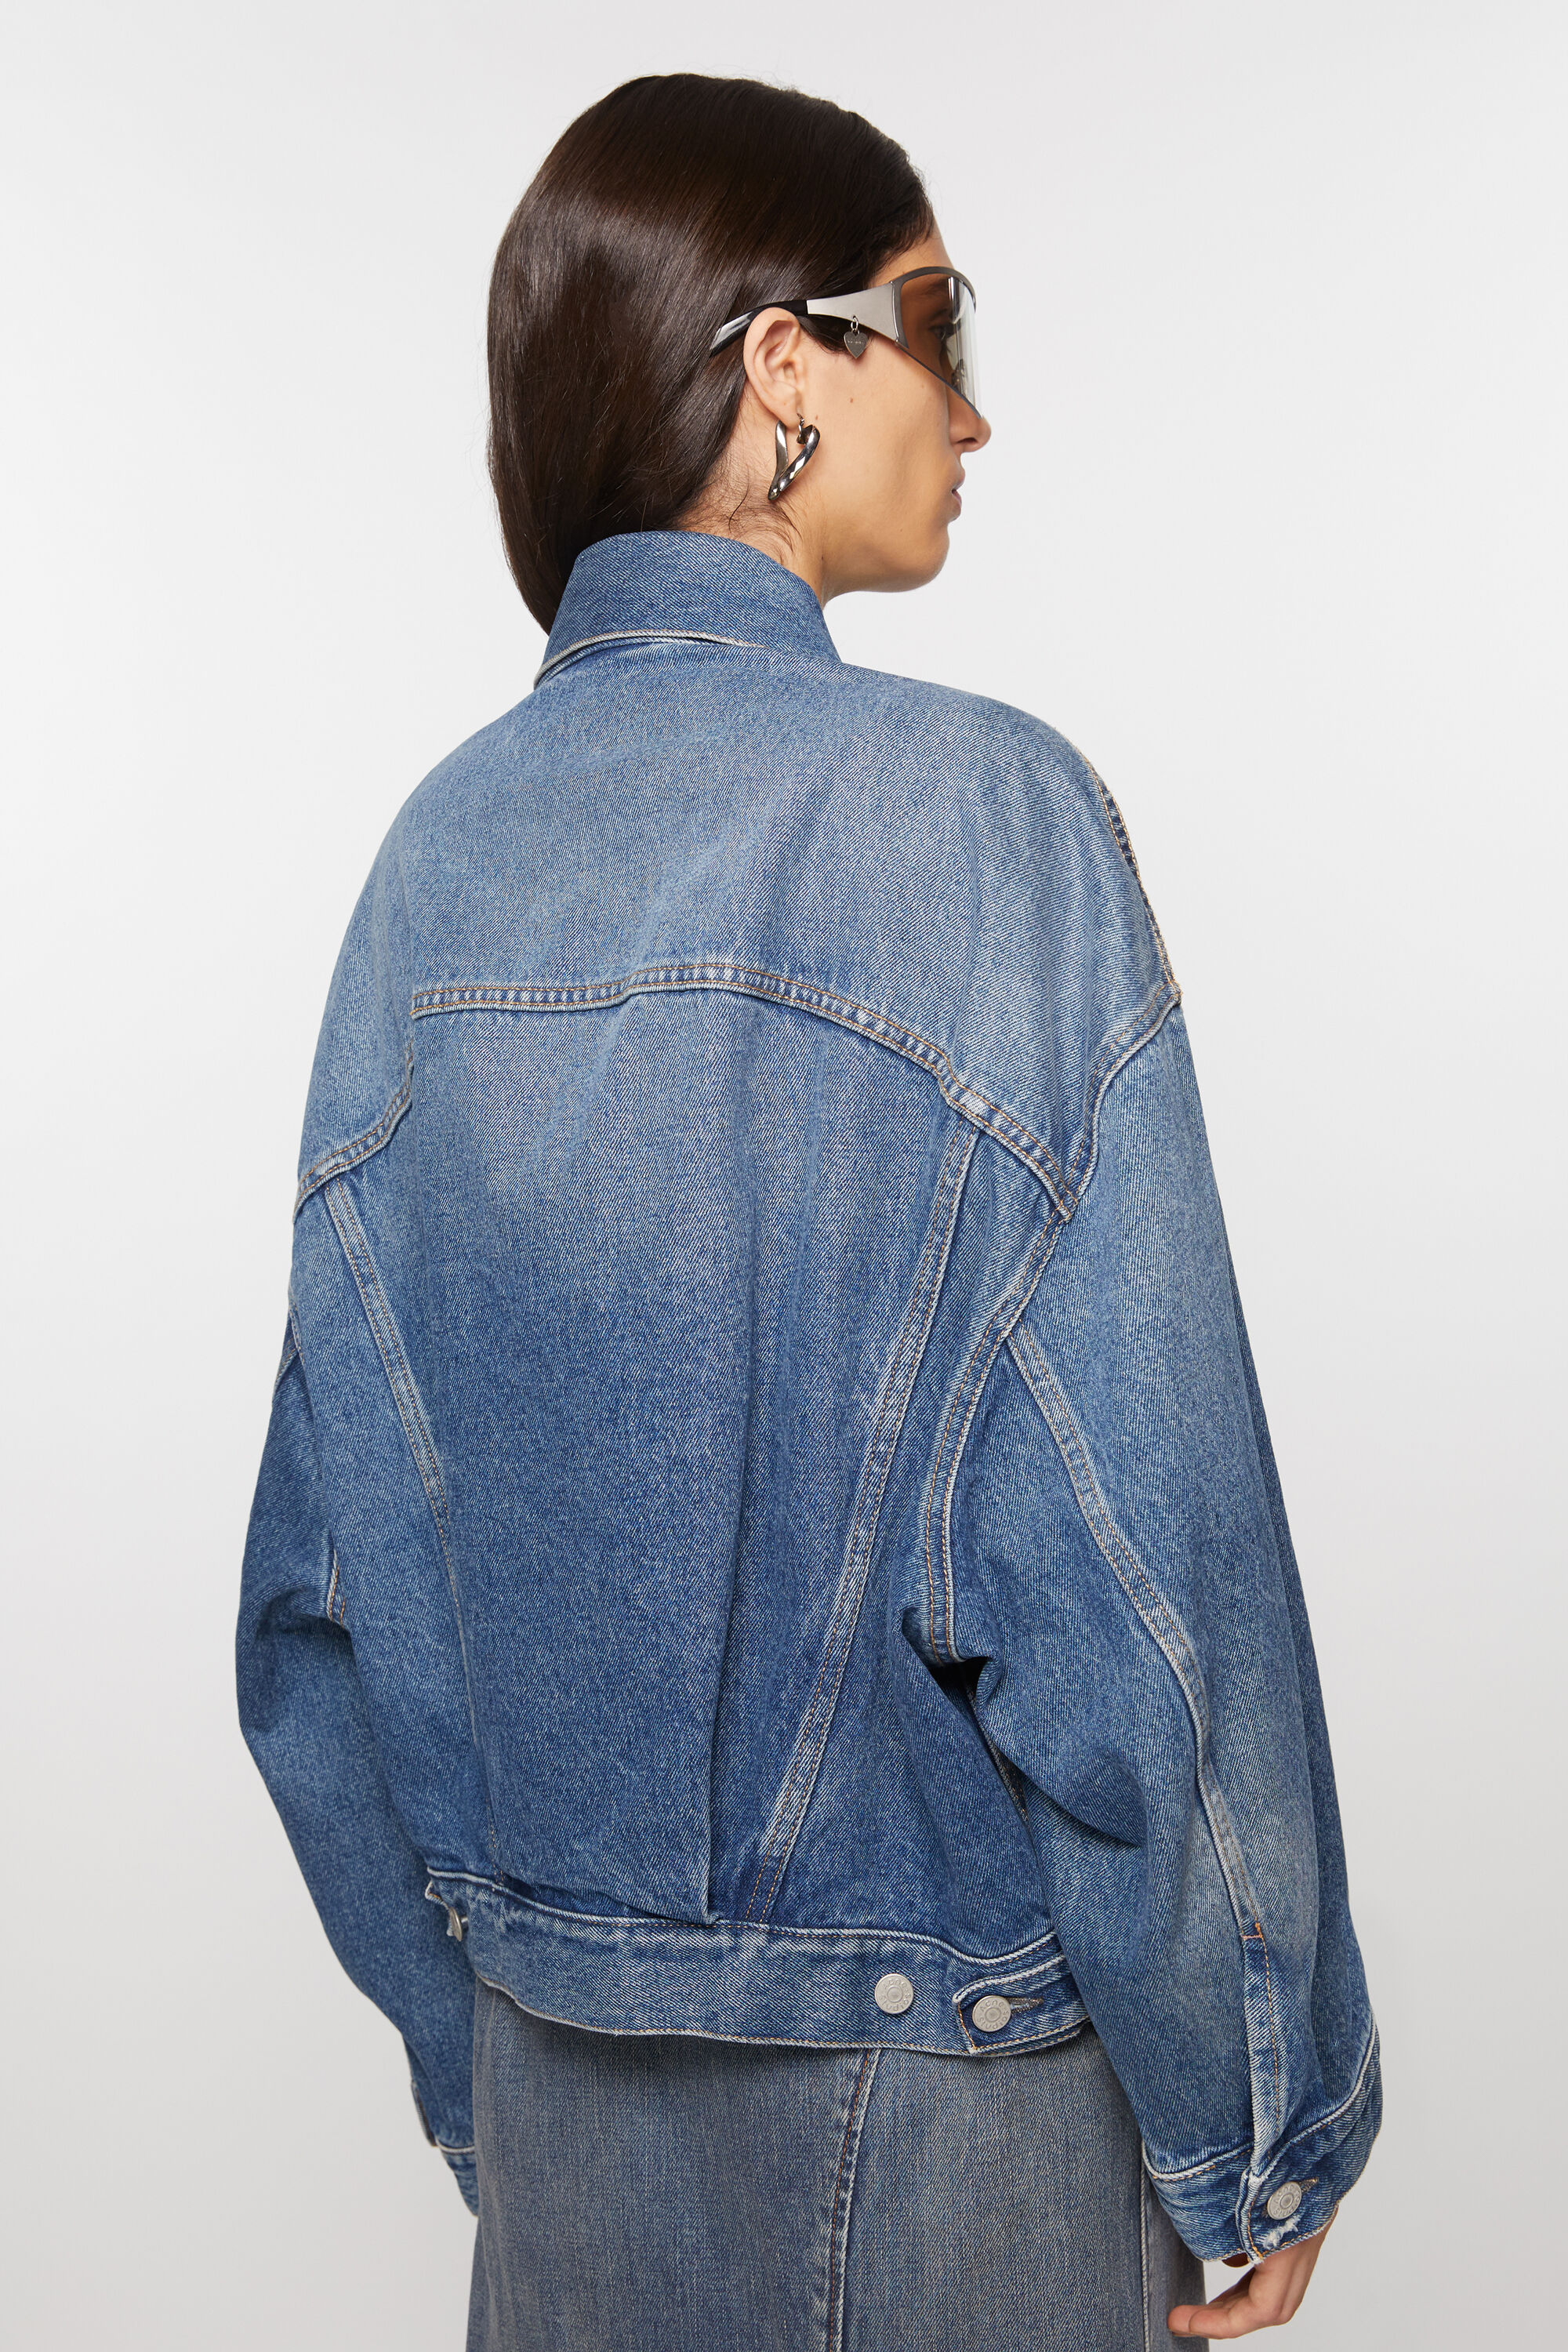 Buy Blue Jackets & Coats for Men by CINOCCI Online | Ajio.com